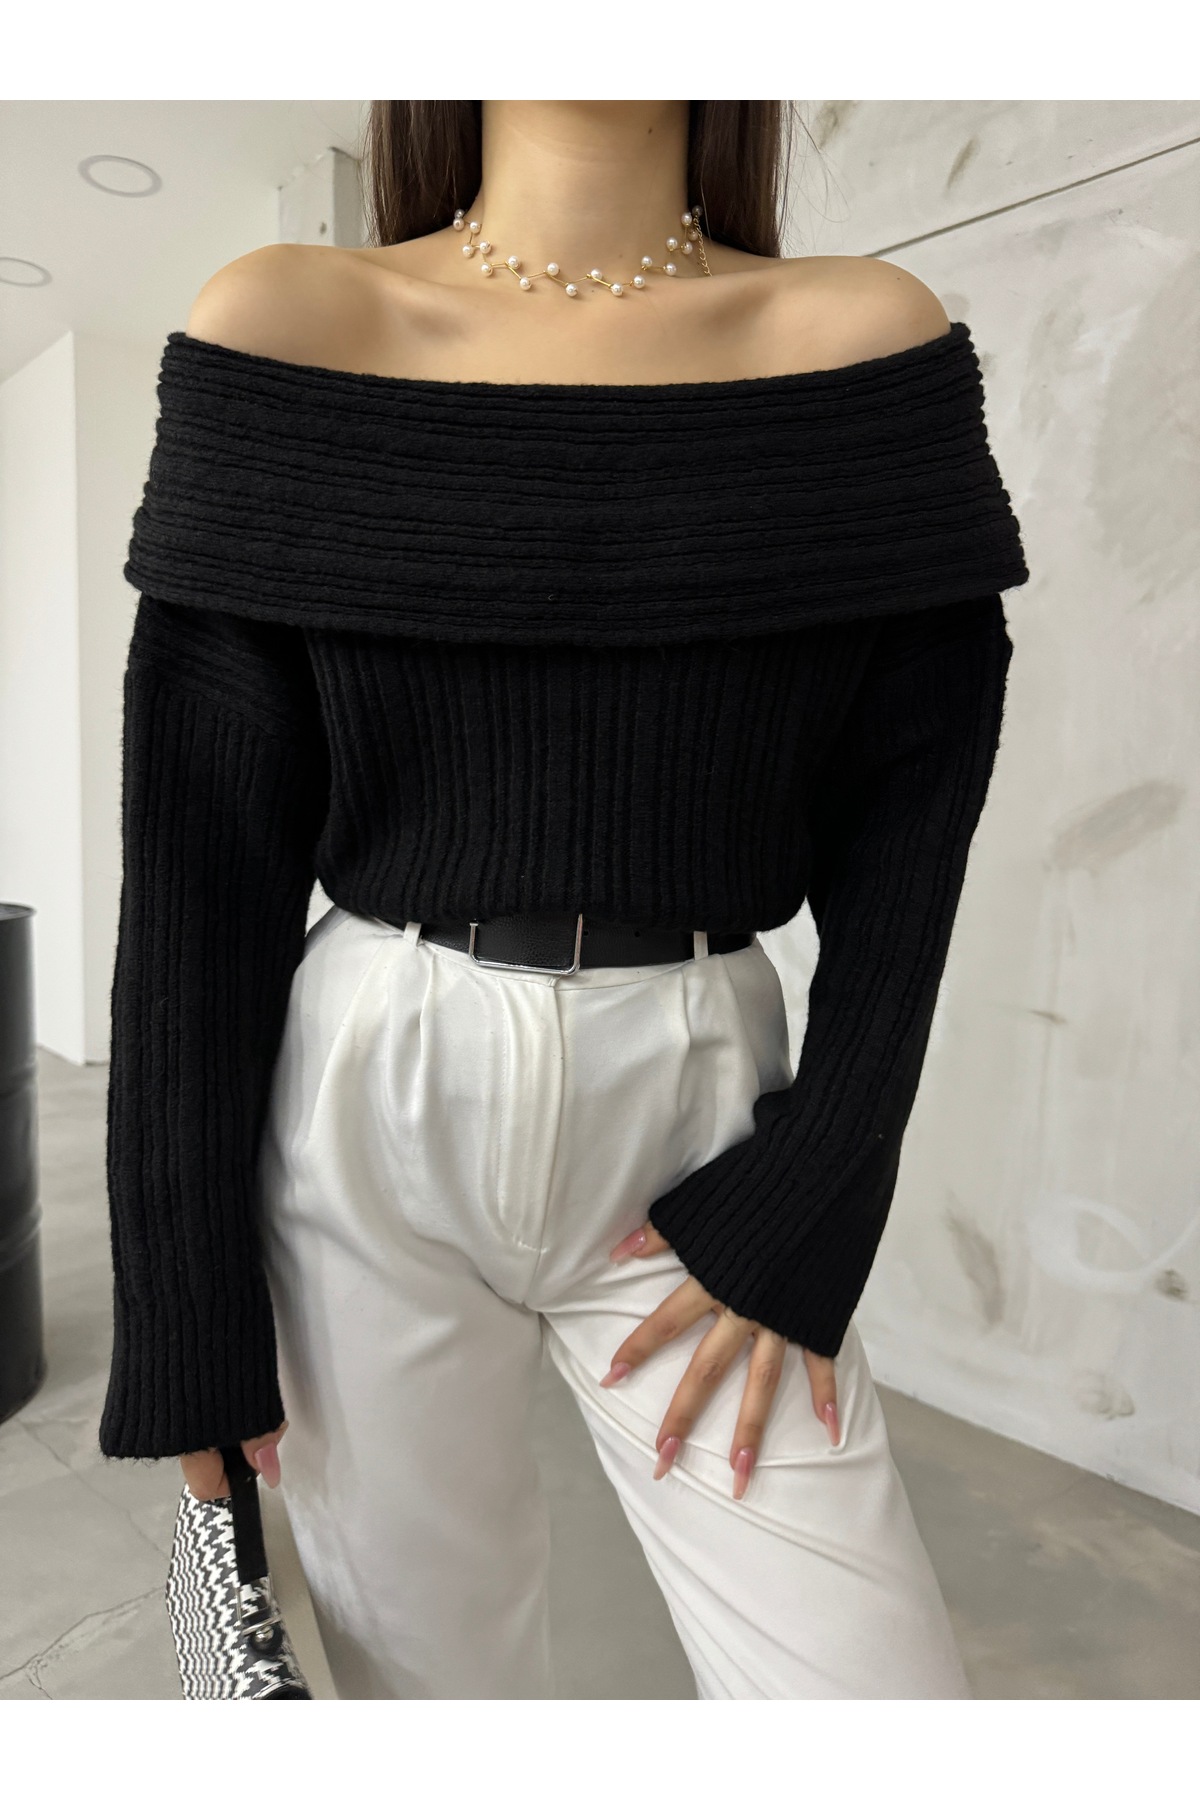 BİKELİFE Women's Madonna Collar Open Shoulders Knitwear Sweater